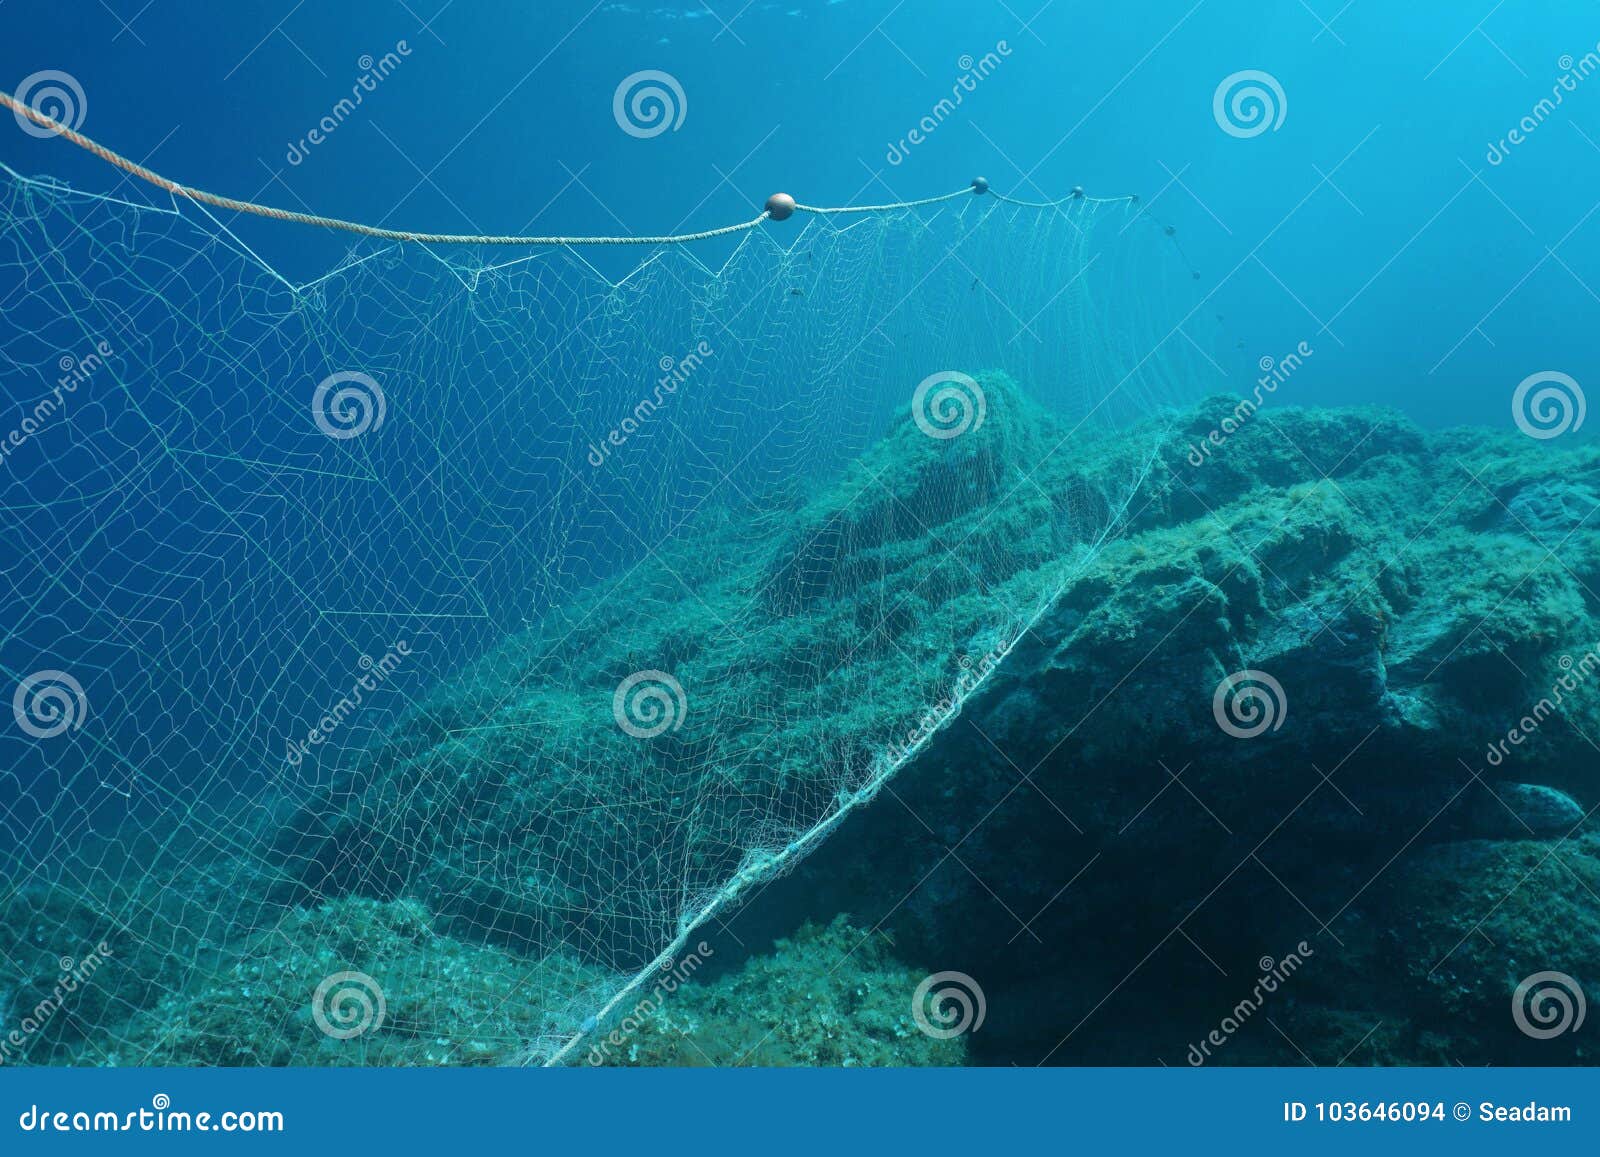 1,316 Underwater Fishing Net Stock Photos - Free & Royalty-Free